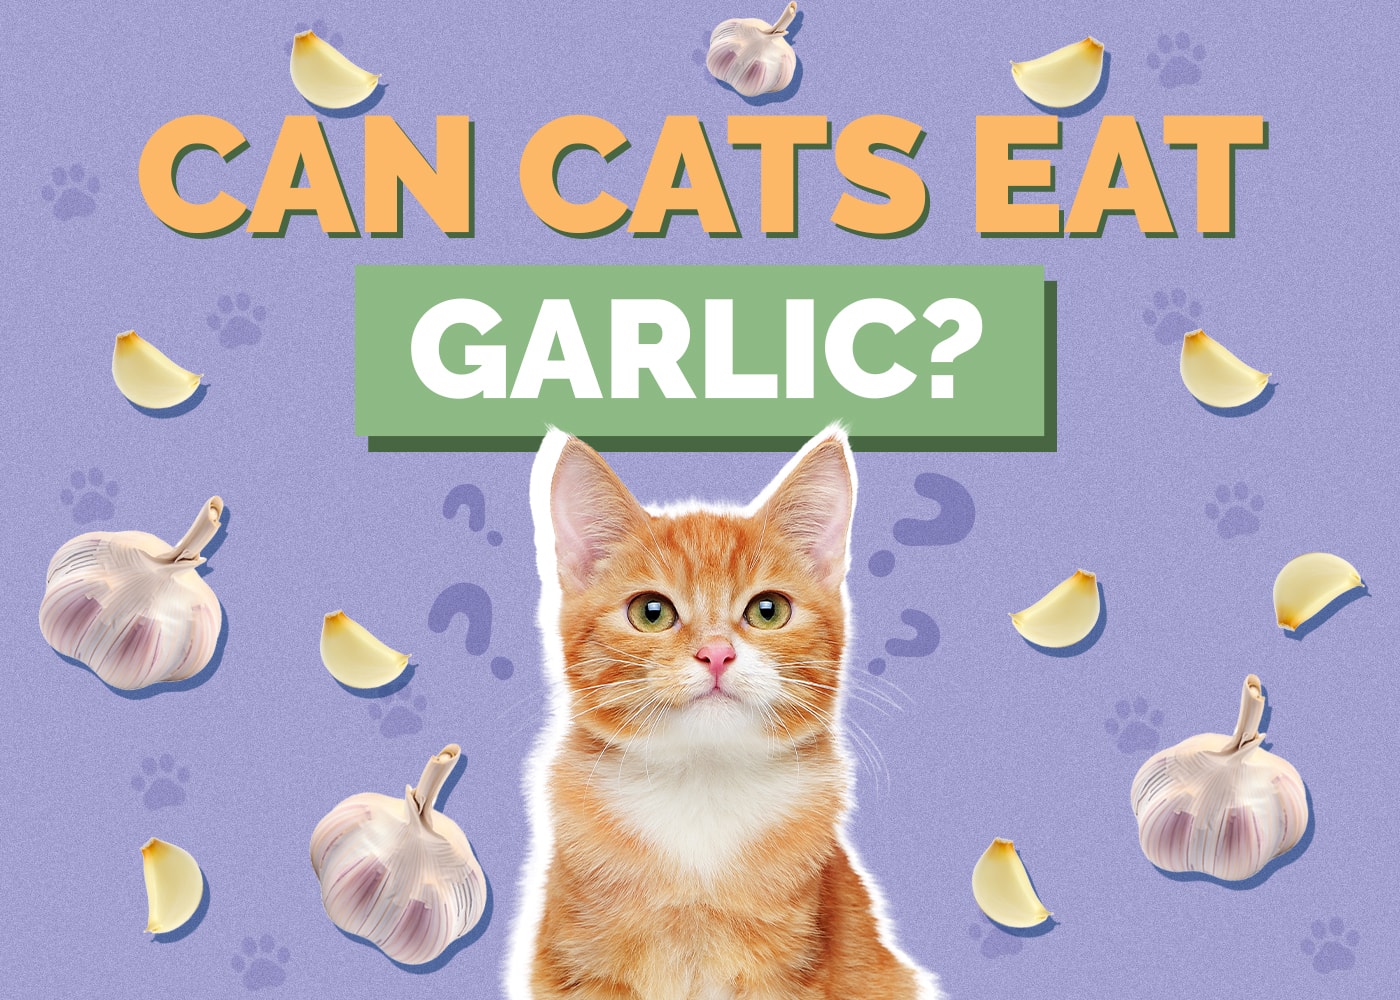 Can Cats Eat garlic